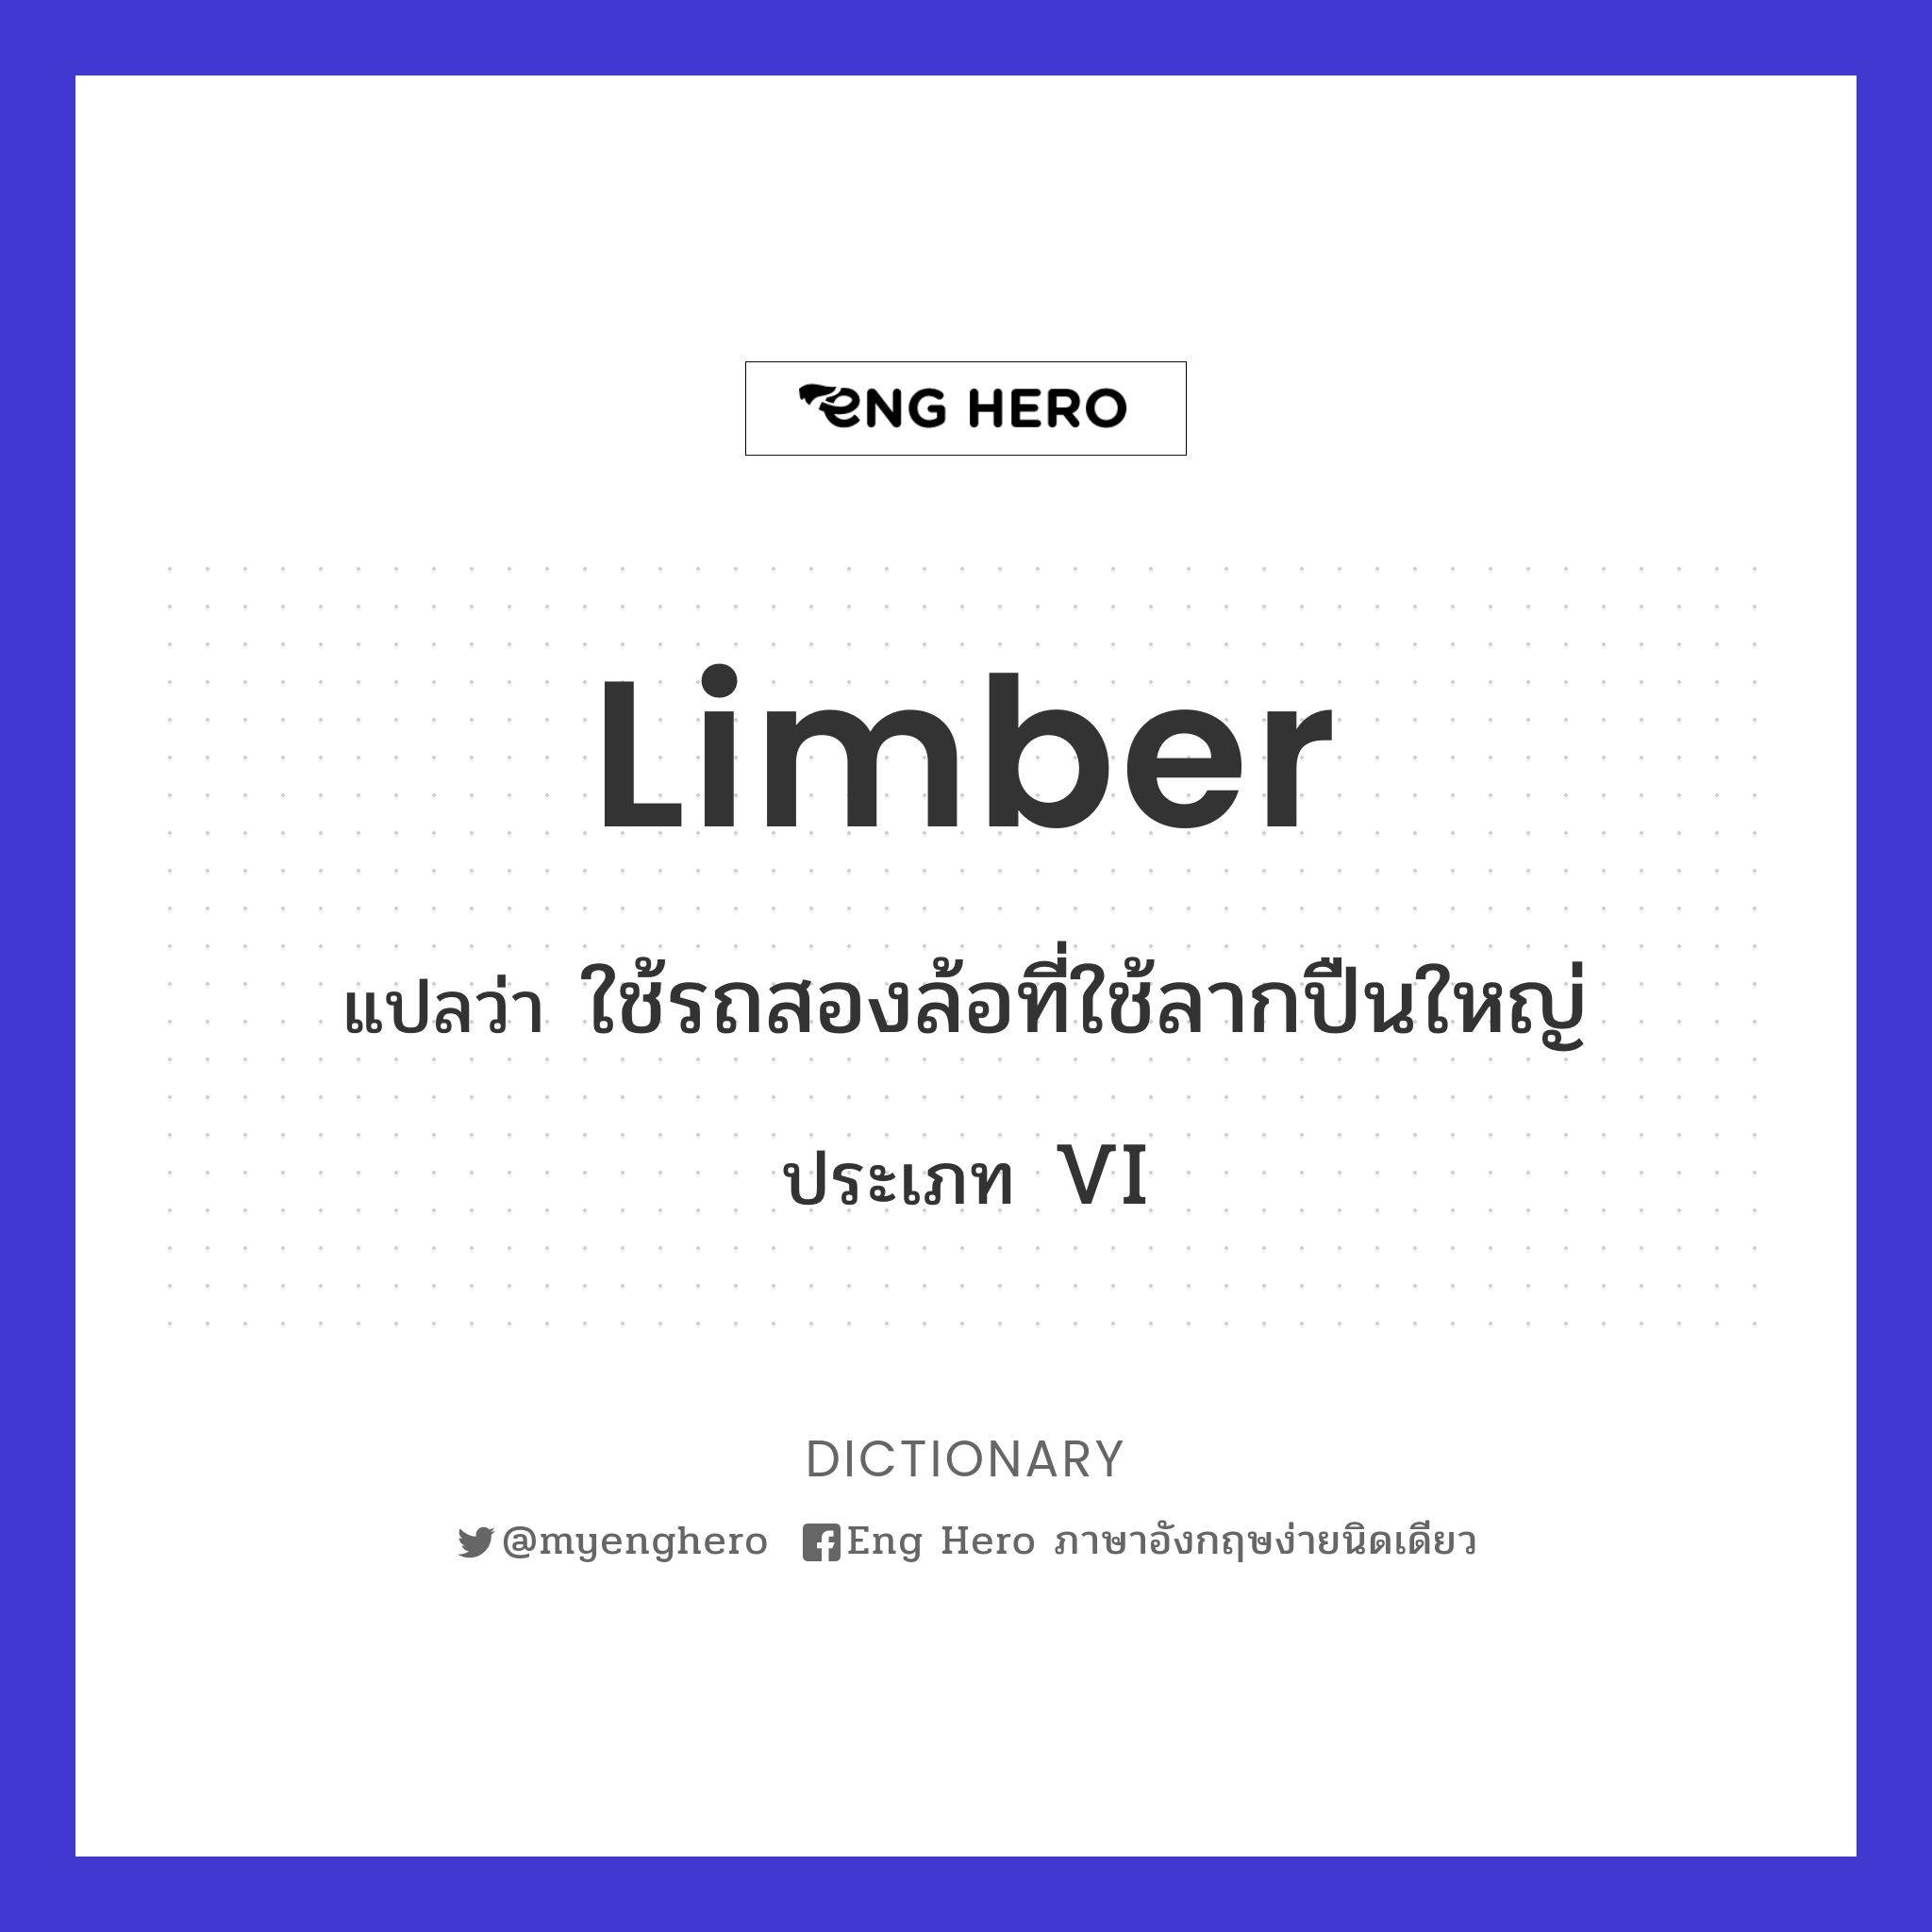 limber